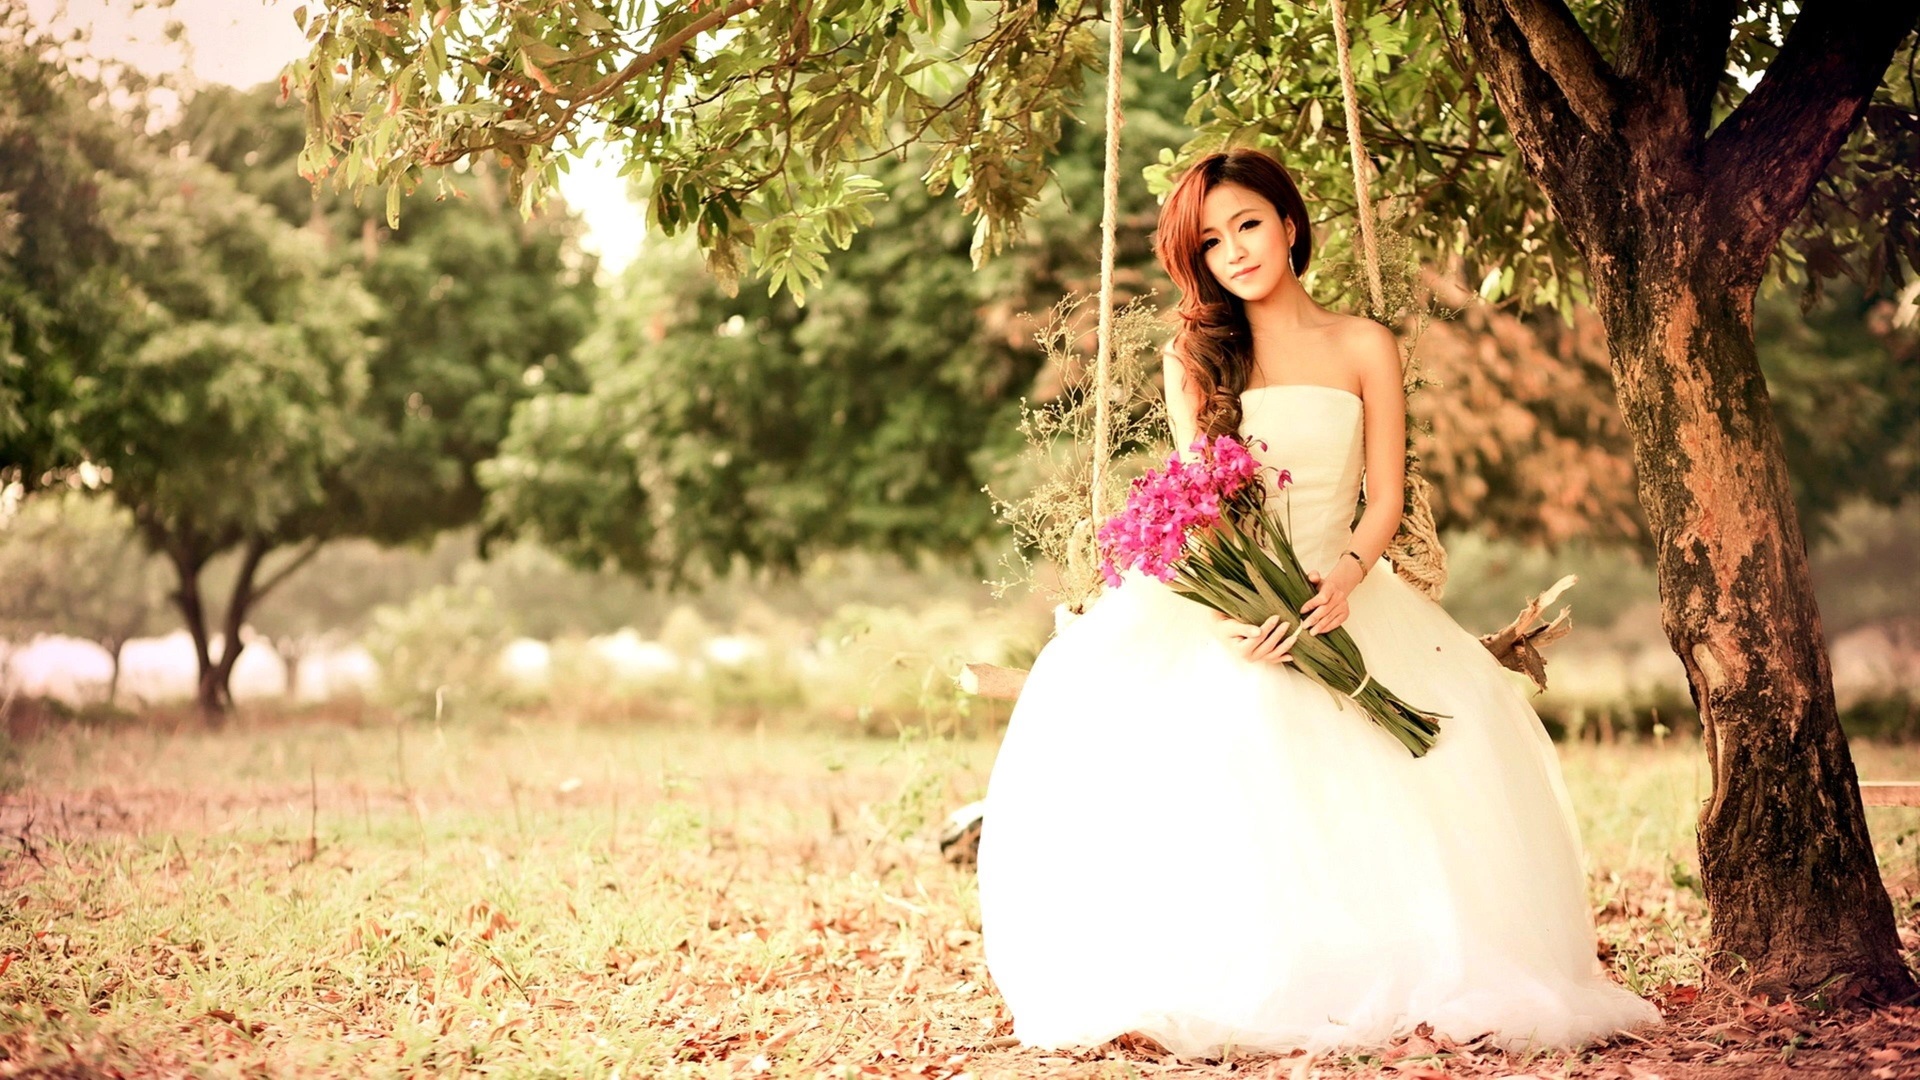 Femme asiatique - Tenue de mariée.jpg